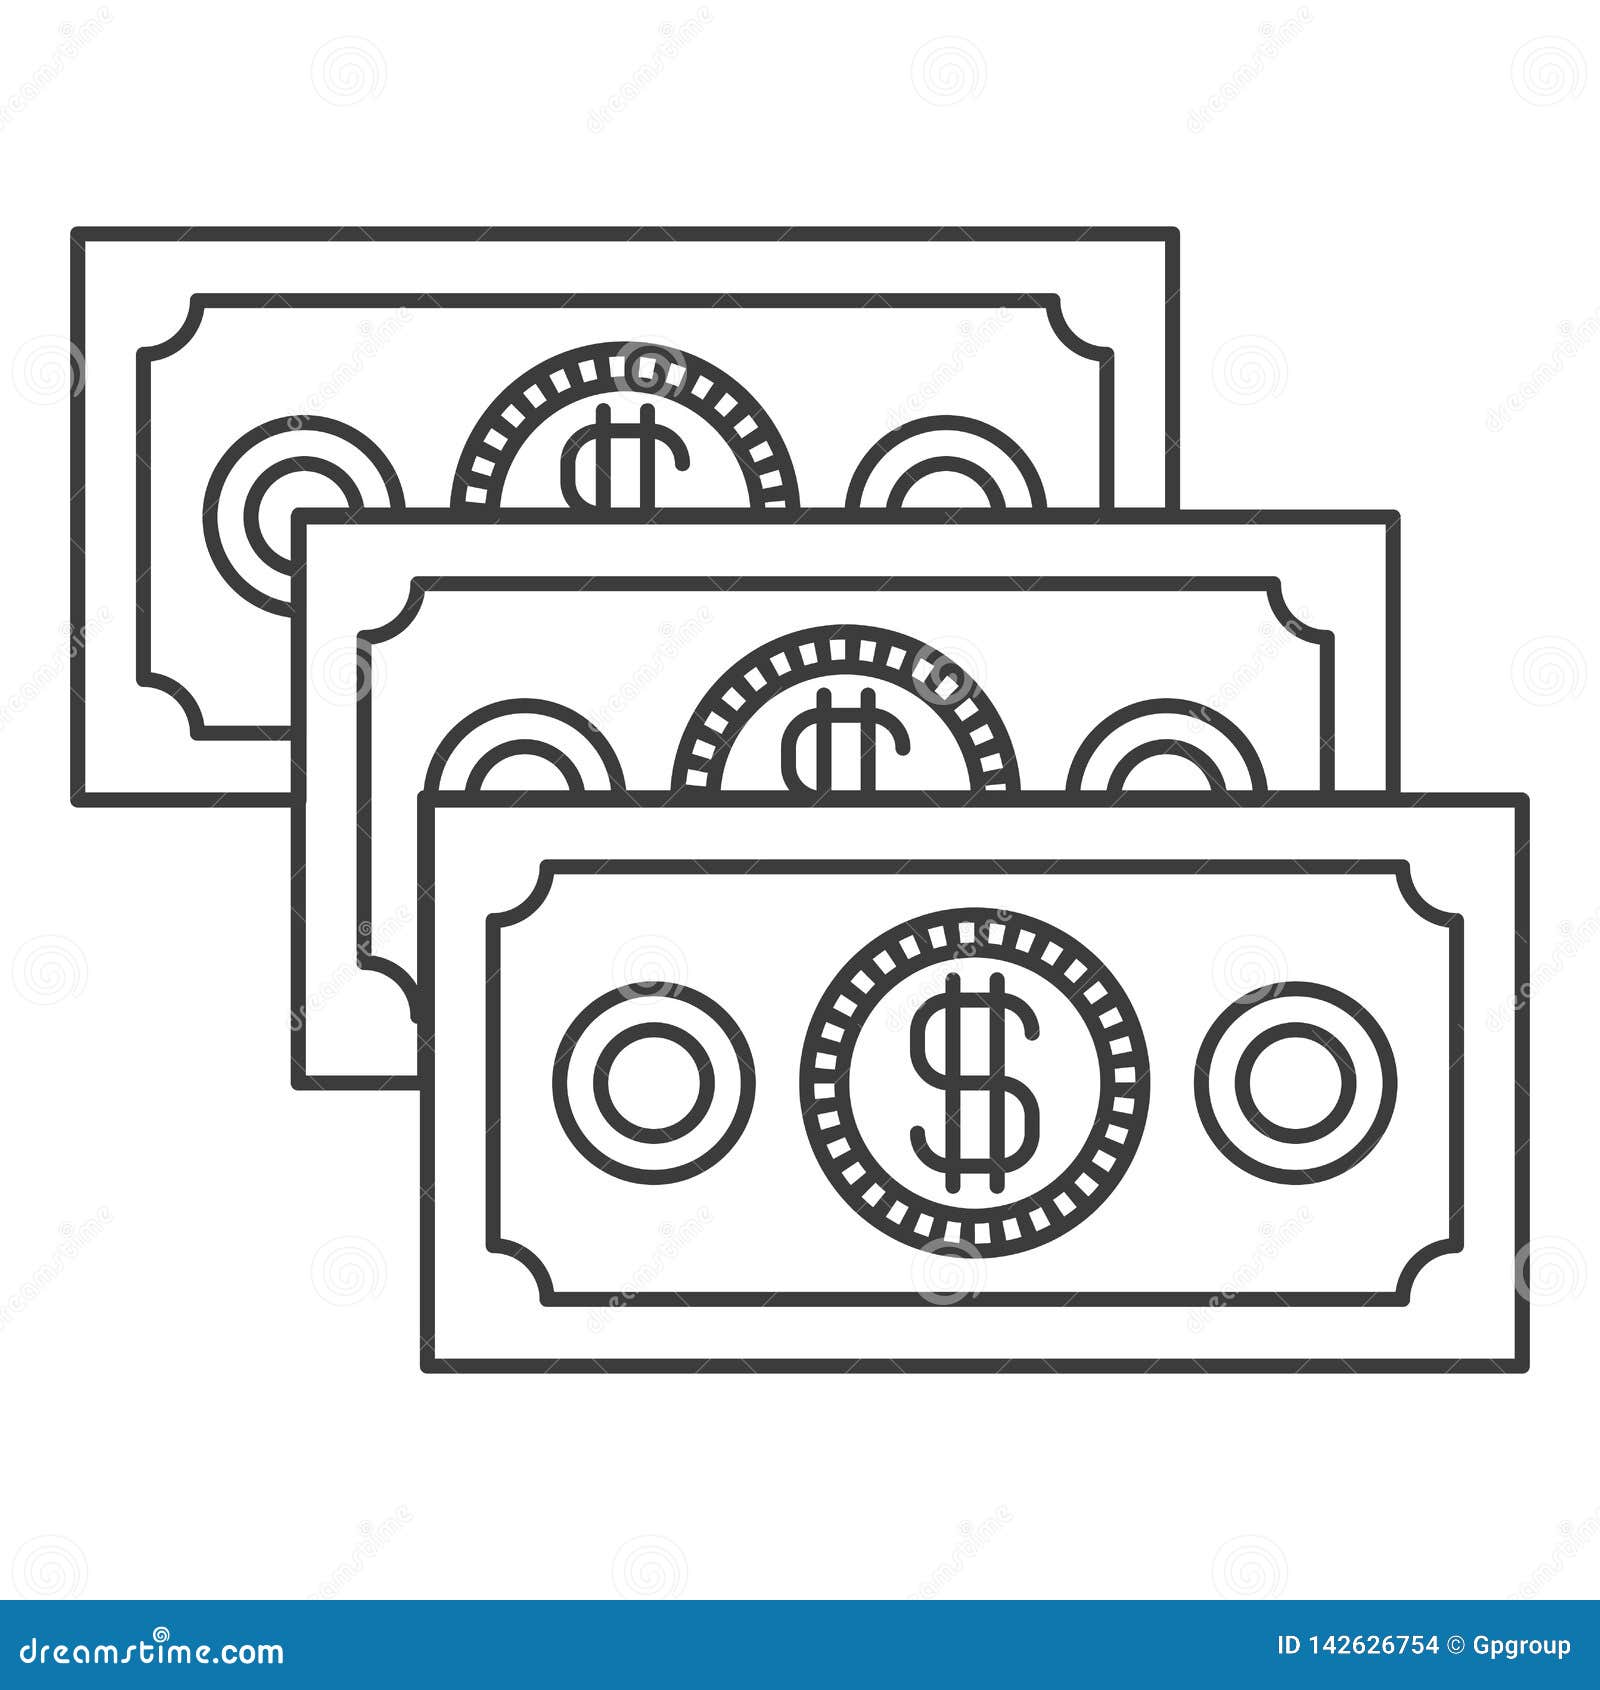 stock vector. Illustration of cash, market, commerce - 142626754